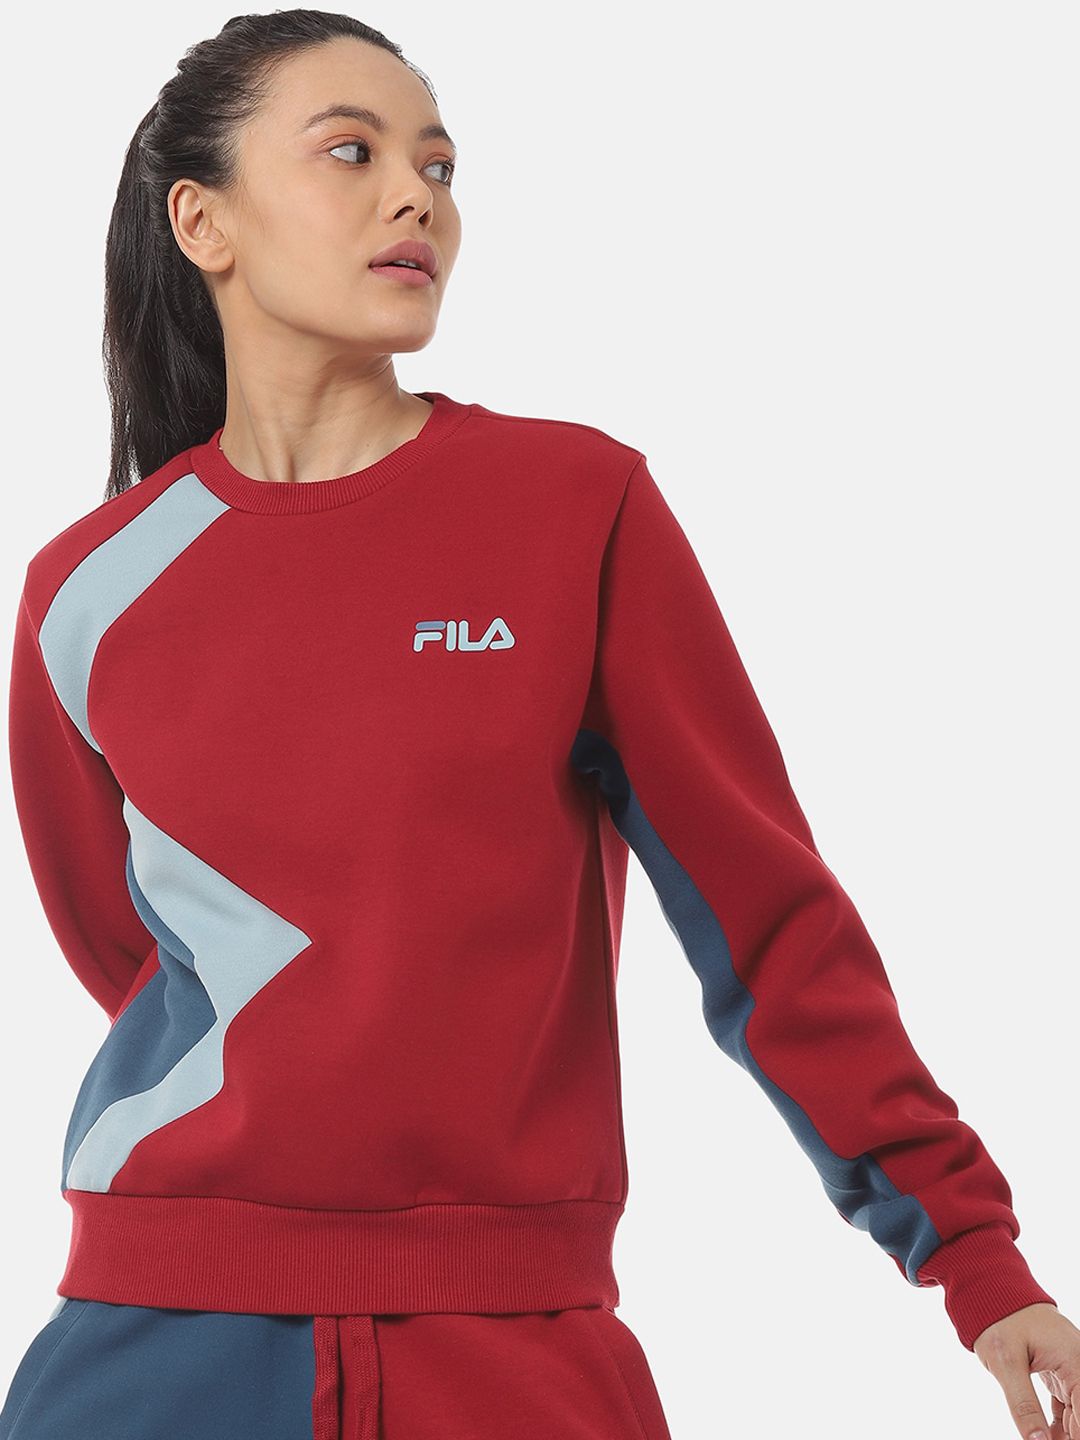 FILA Women Red & Grey Colourblocked Sweatshirt Price in India